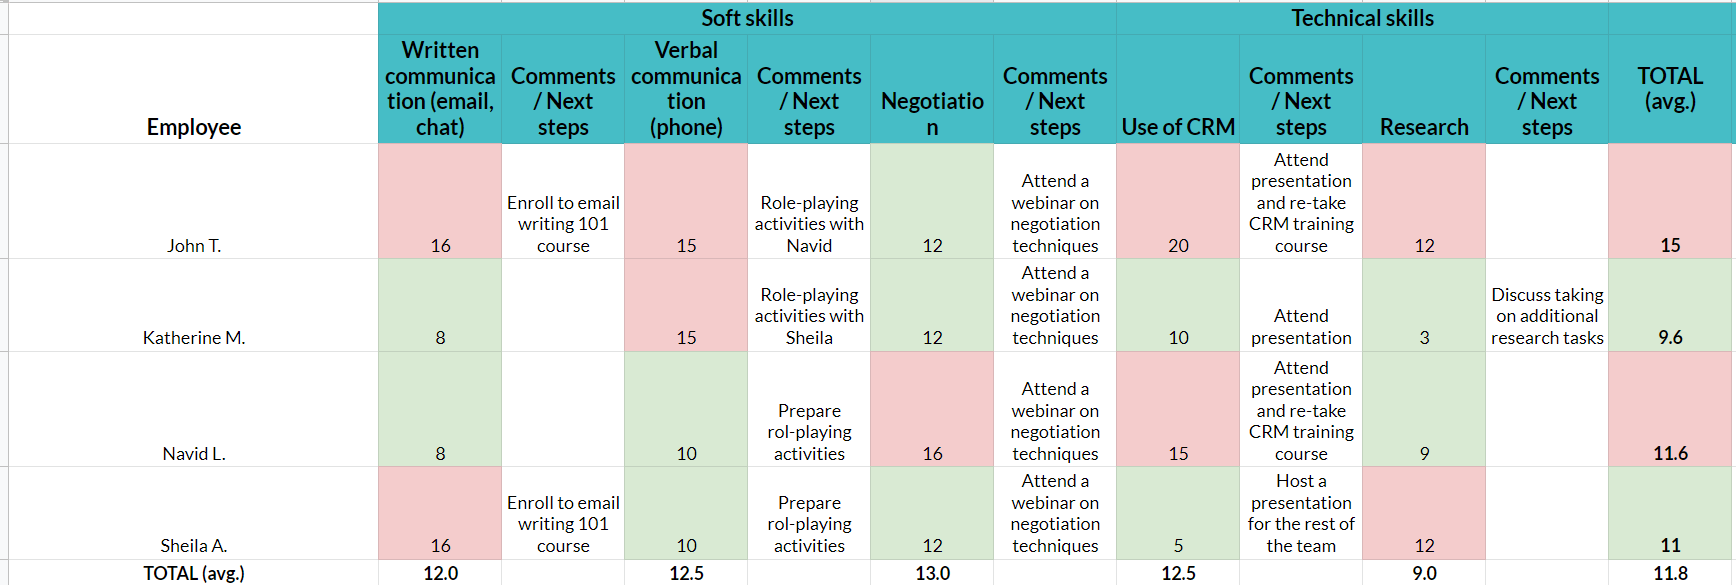 Skills gap analysis template | Individual skills gap analysis